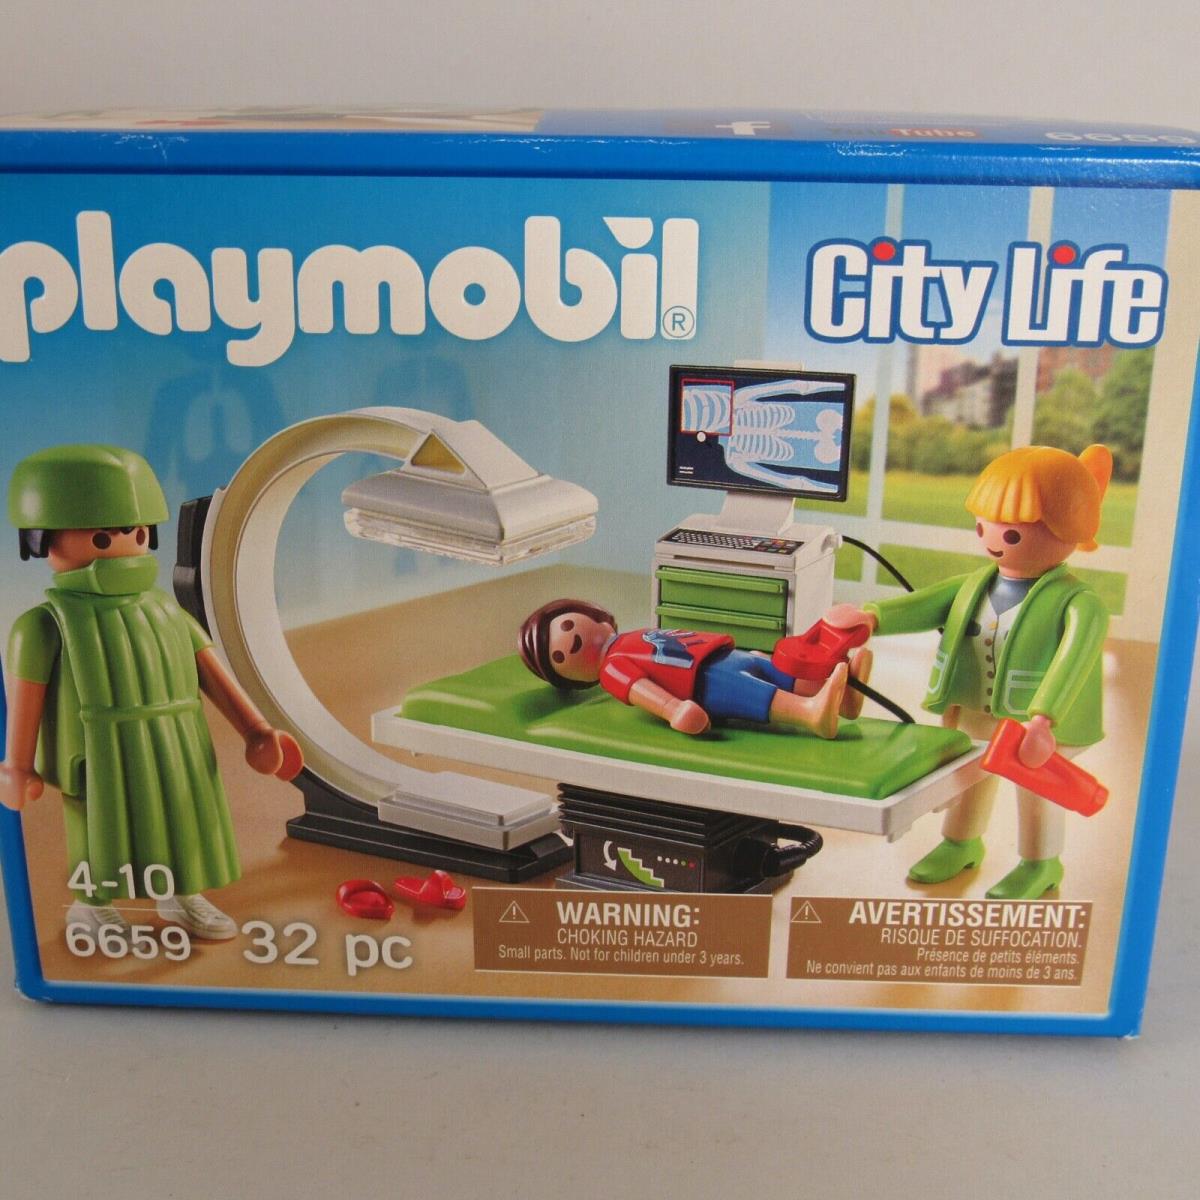 Playmobil City Life 6659 X-ray Room Hospital Doctor